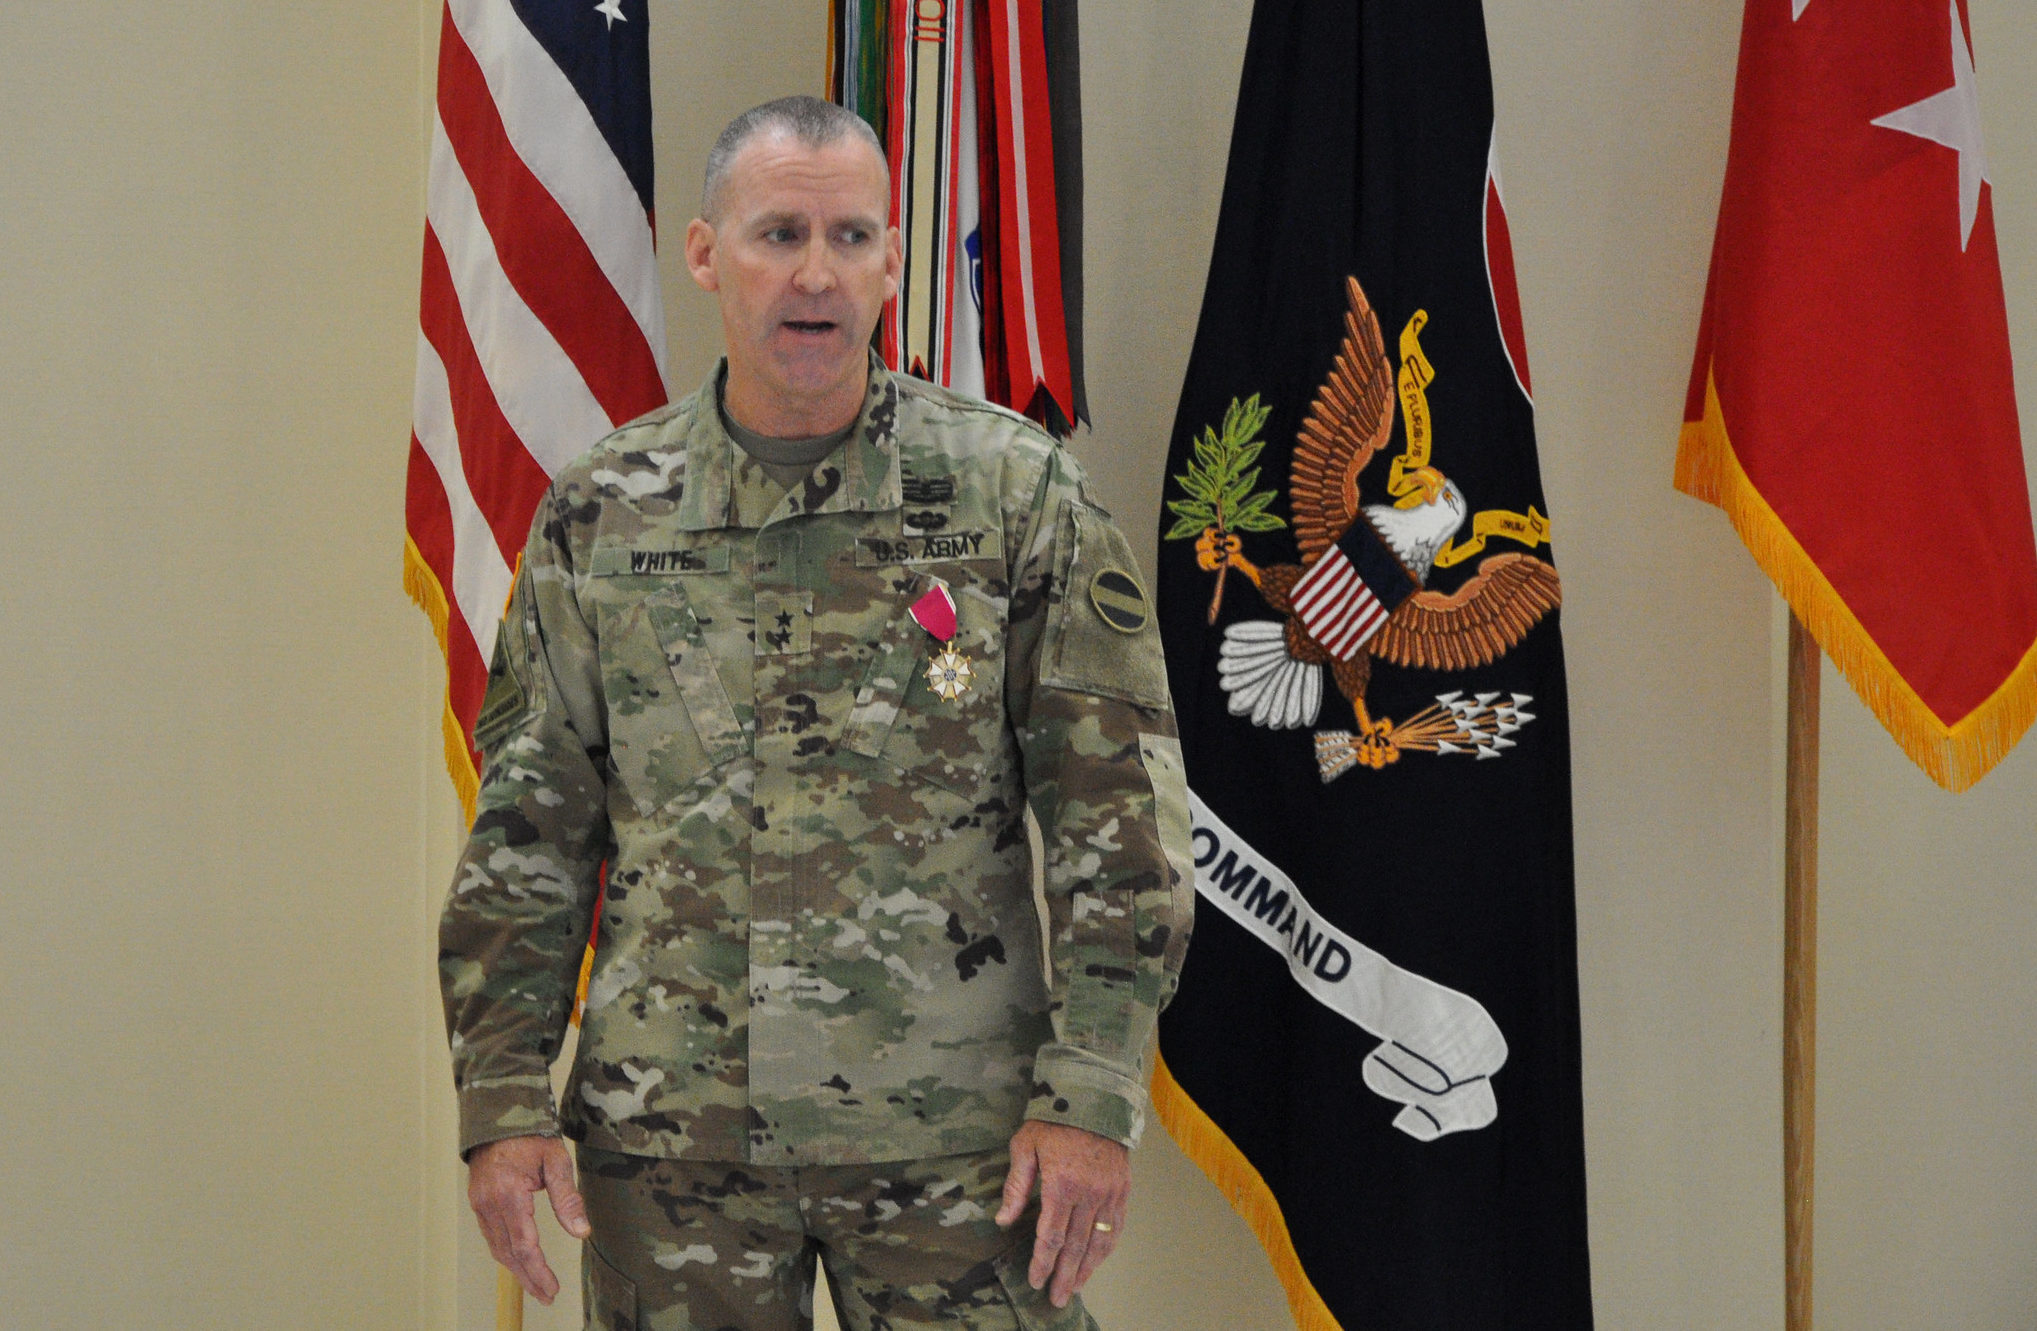 Lt. General Robert P. White